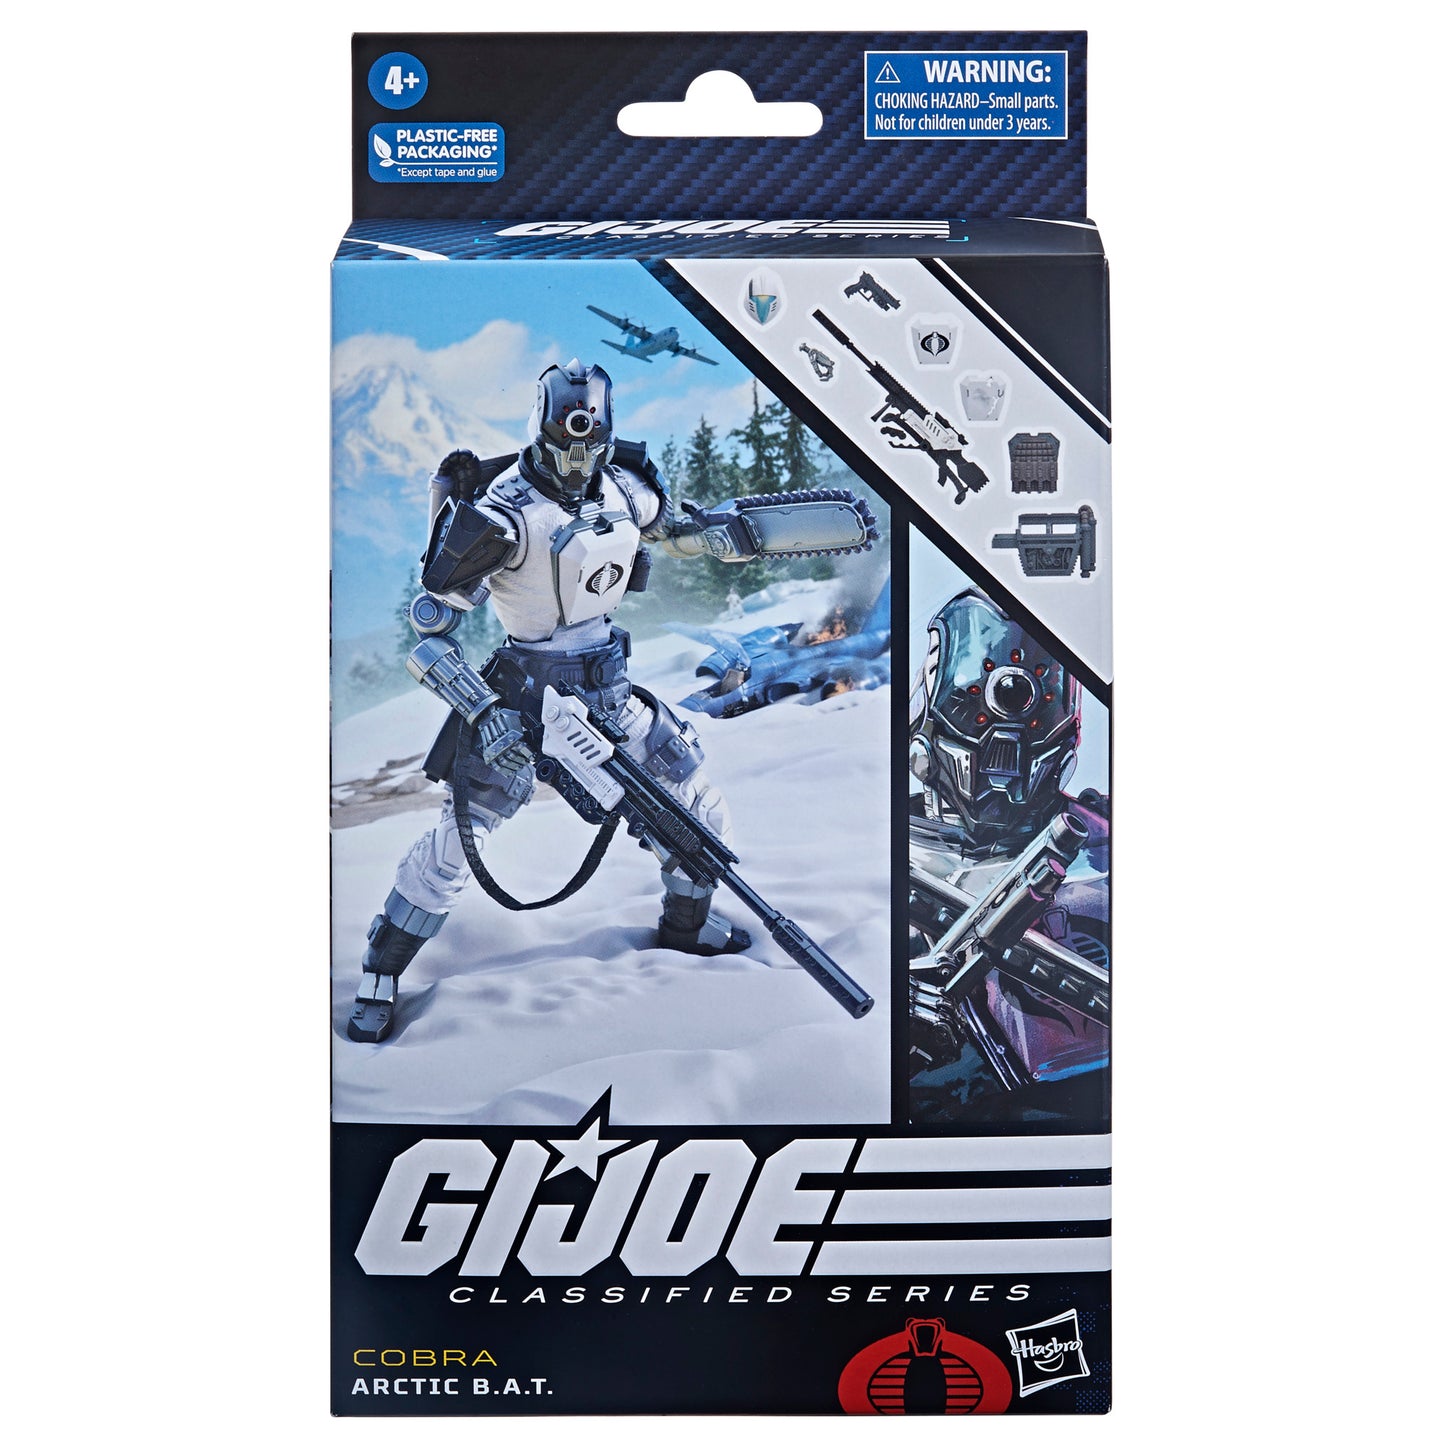 Classified series GI Joe Cobra Artic BAT Action Figure - Heretoserveyou